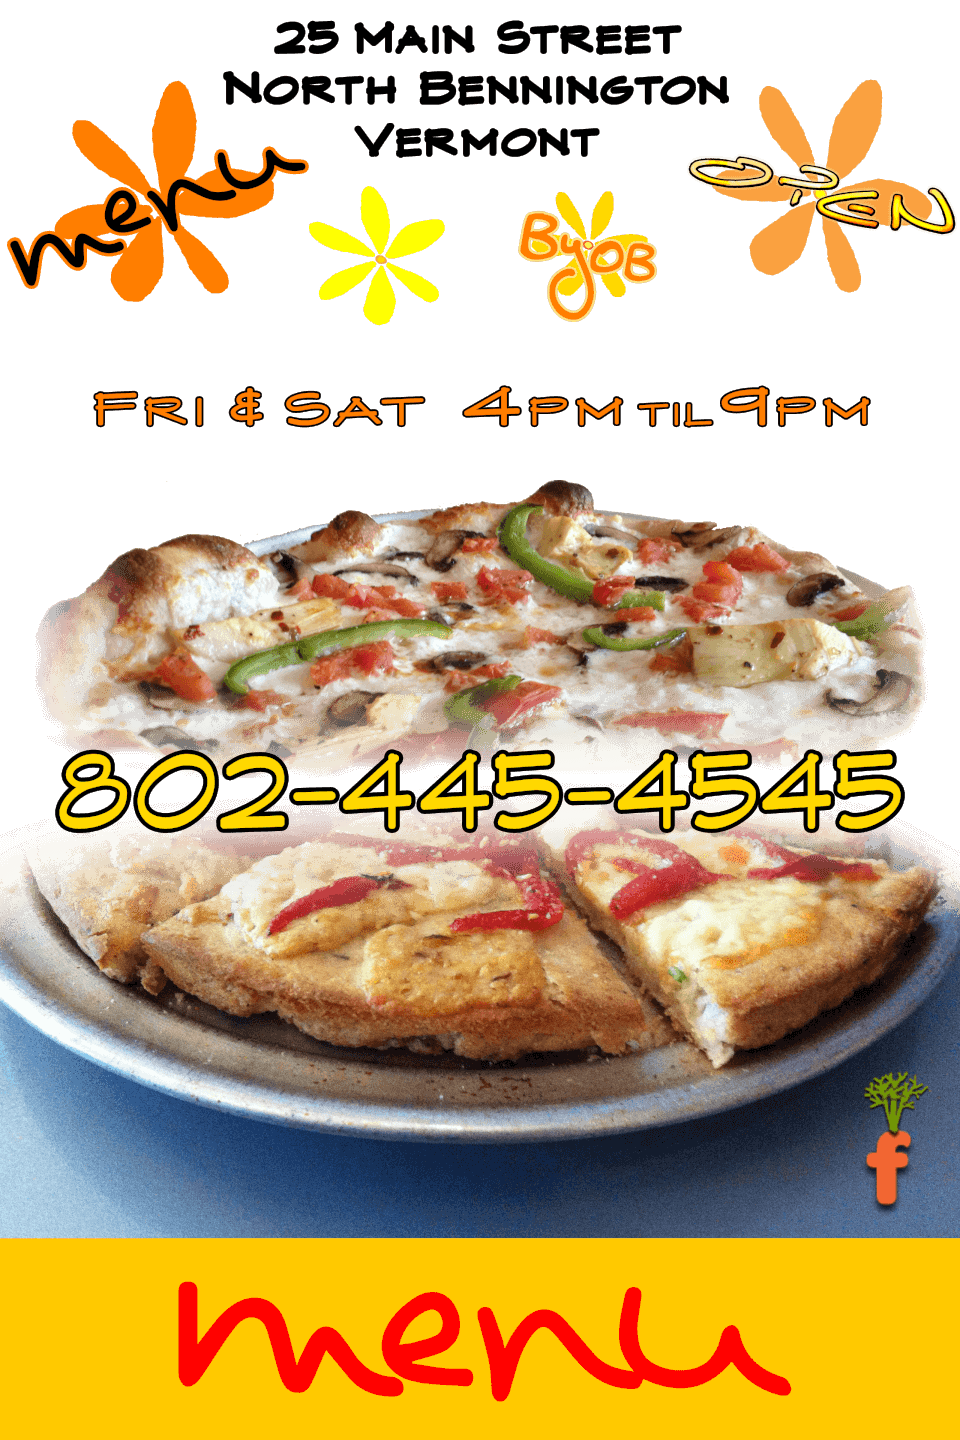 Marigold Kitchen 802 445 4545 Artisan Pizza